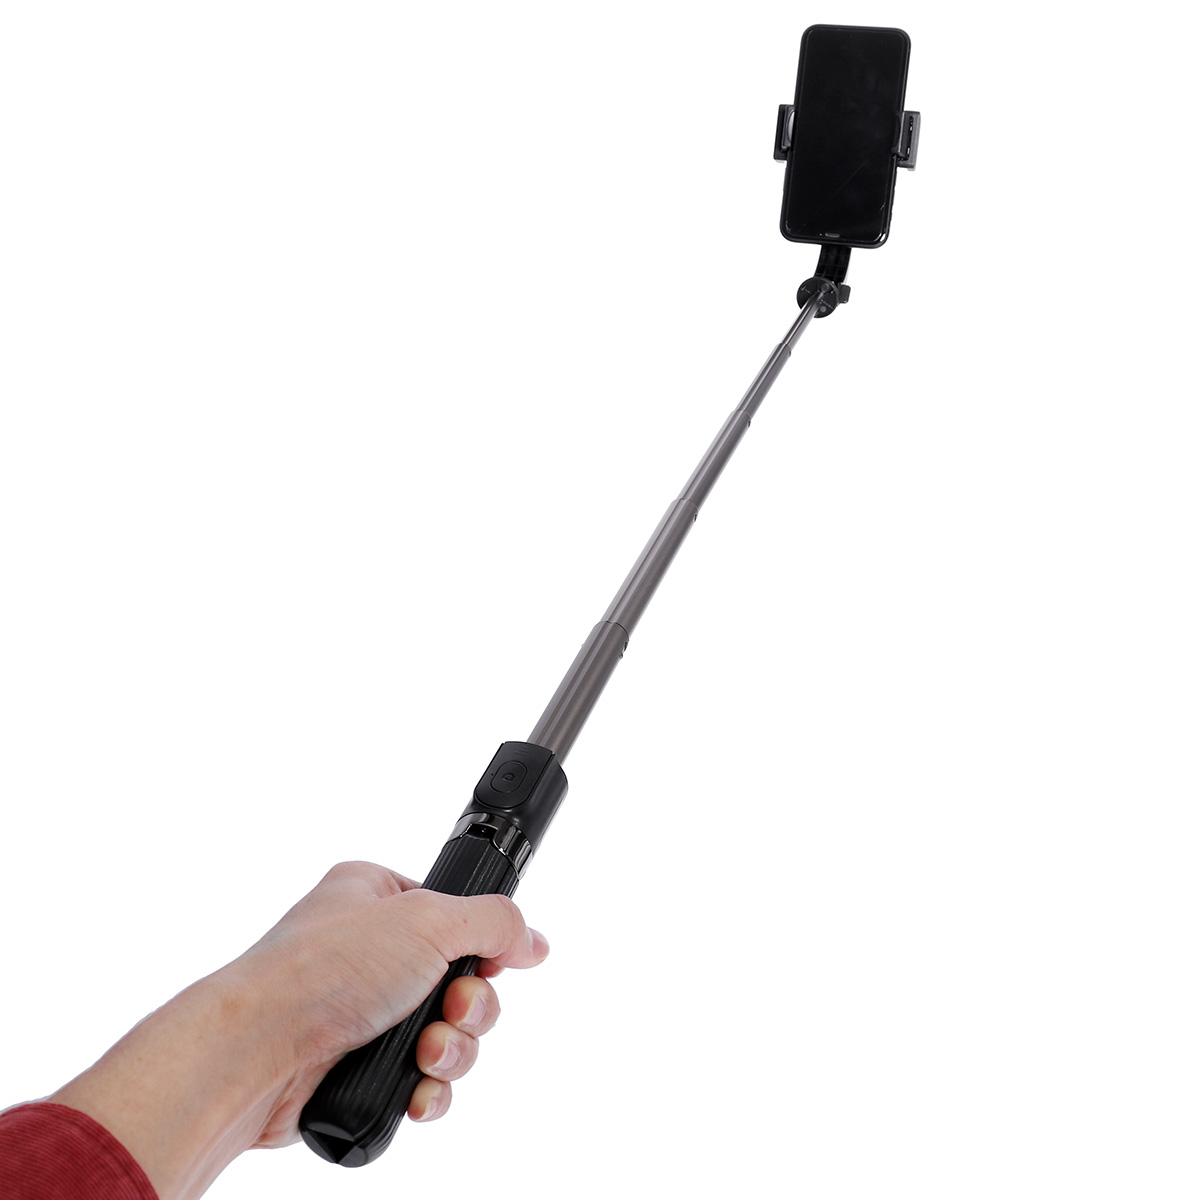 L08-Handheld-Extendable-bluetooth-Aluminium-Alloy-Tripod-Selfie-Stick-for-Mobile-Phone-Shooting-Stab-1916702-9